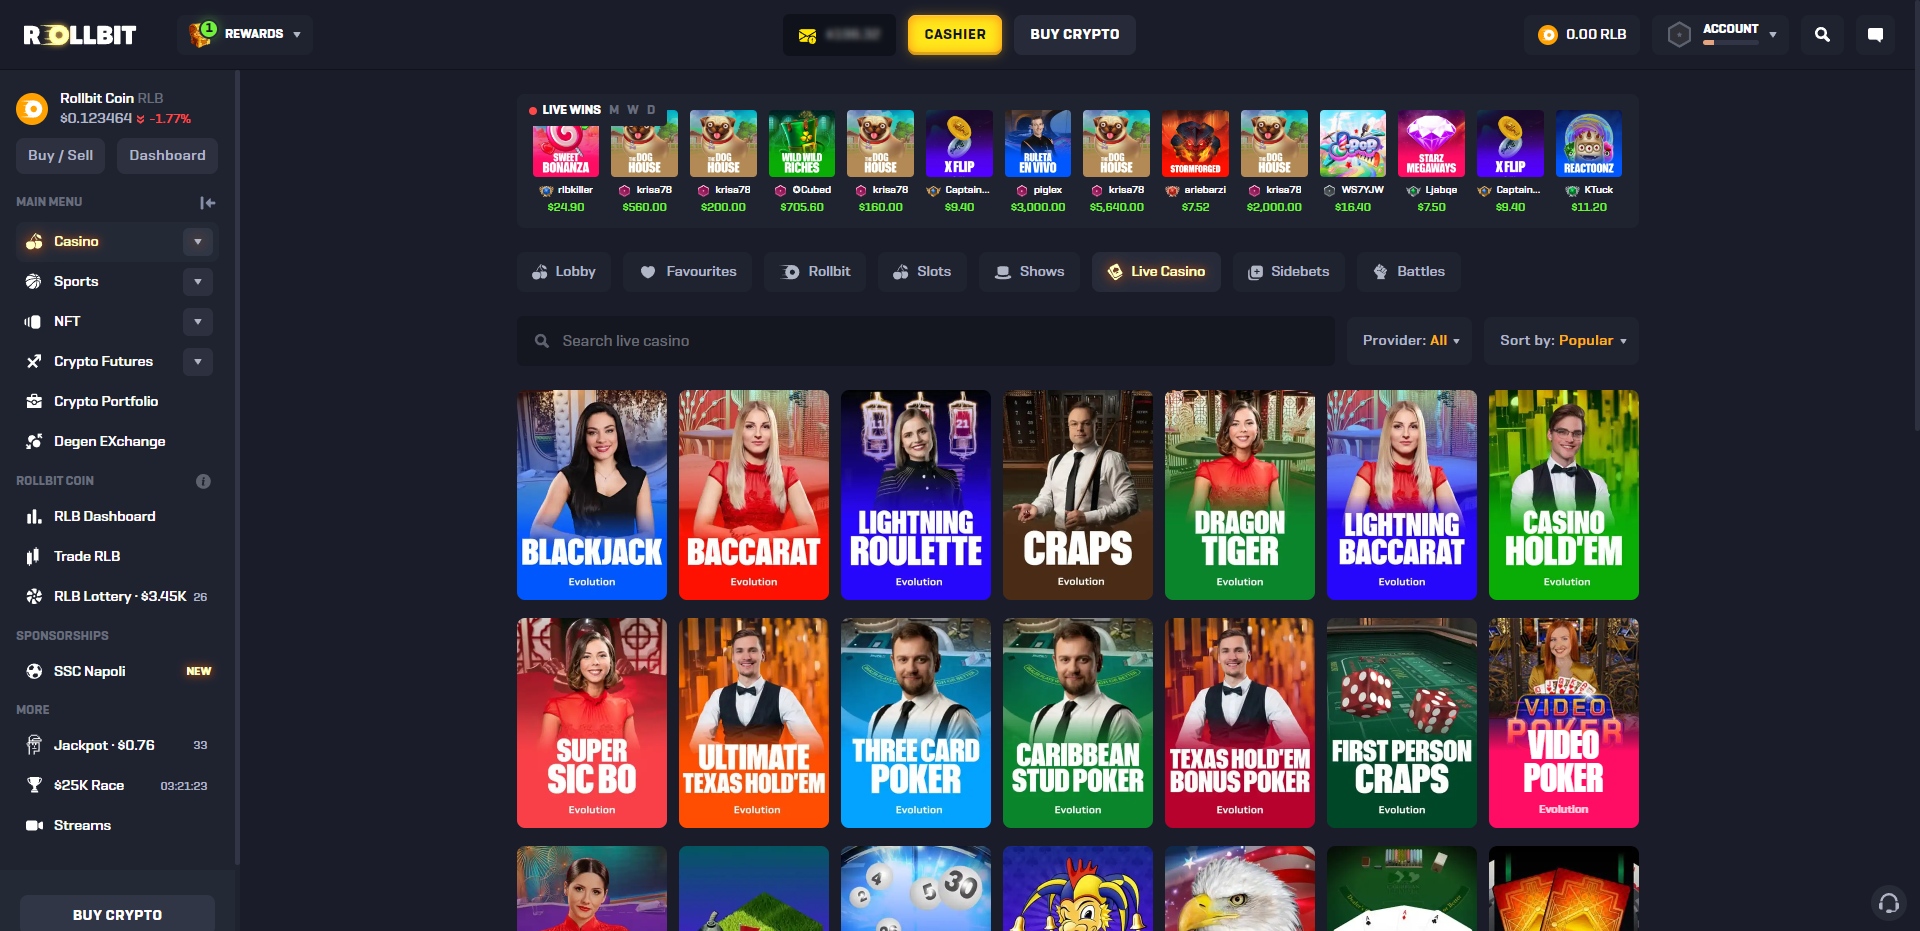 Rollbit Live Casino Spiel-Browser